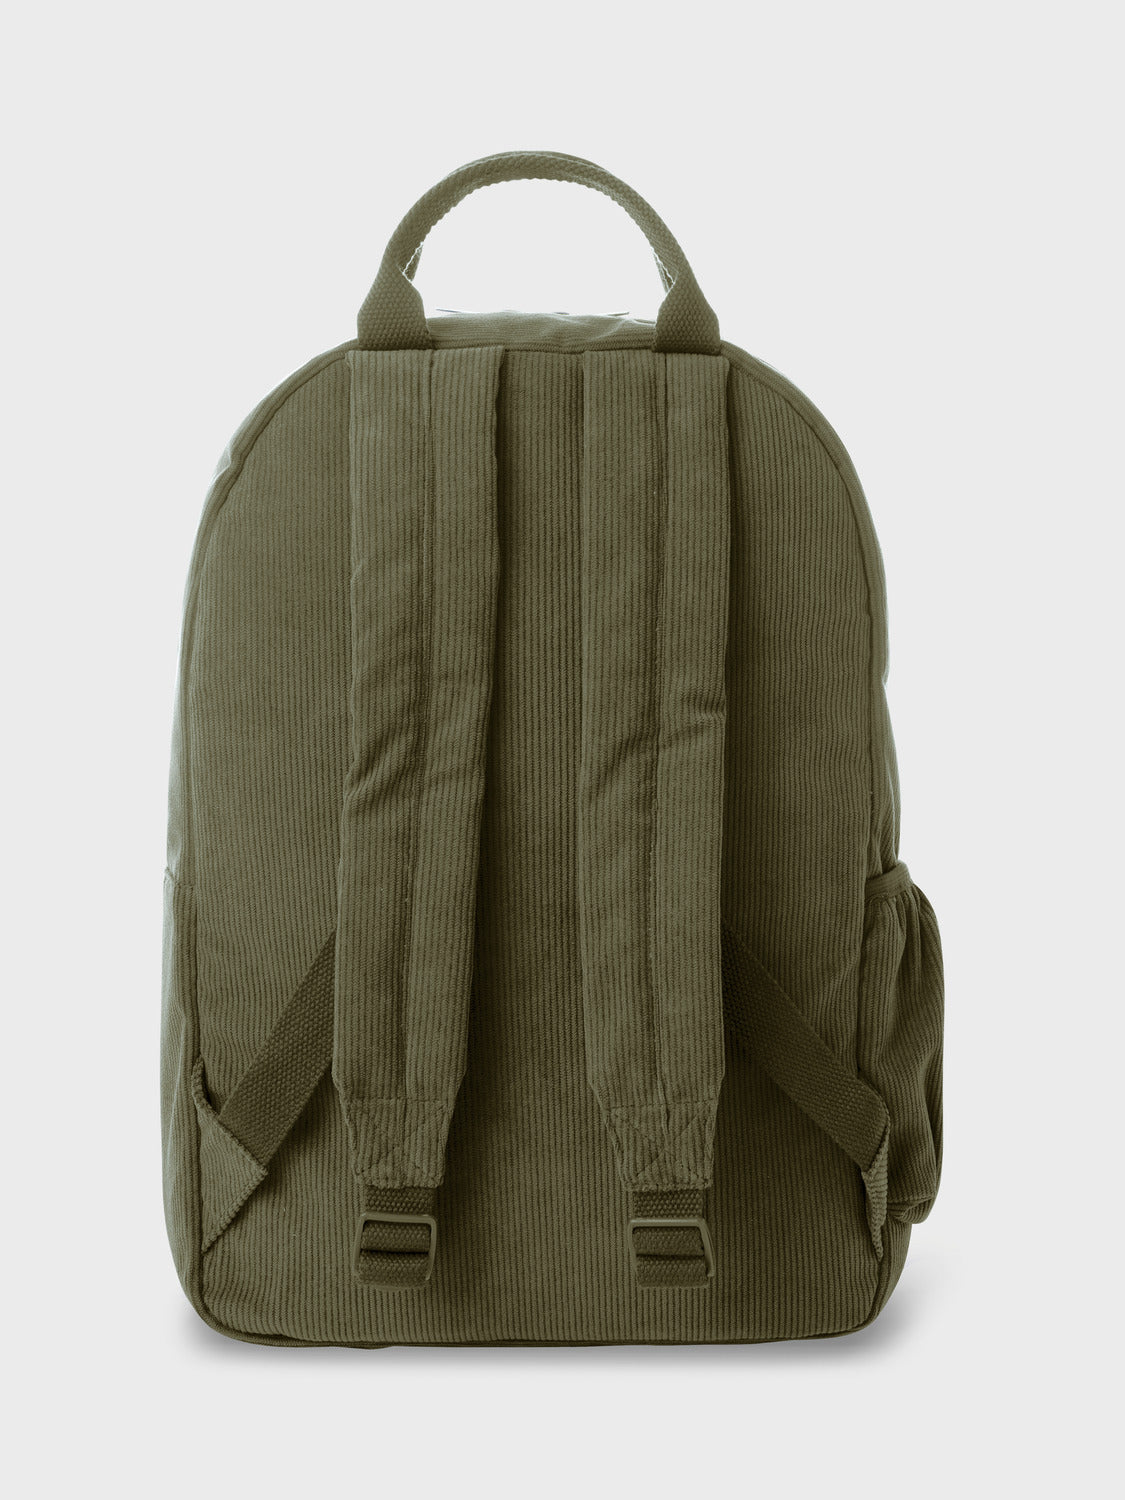 NKMNOLURO Bags - Rifle Green